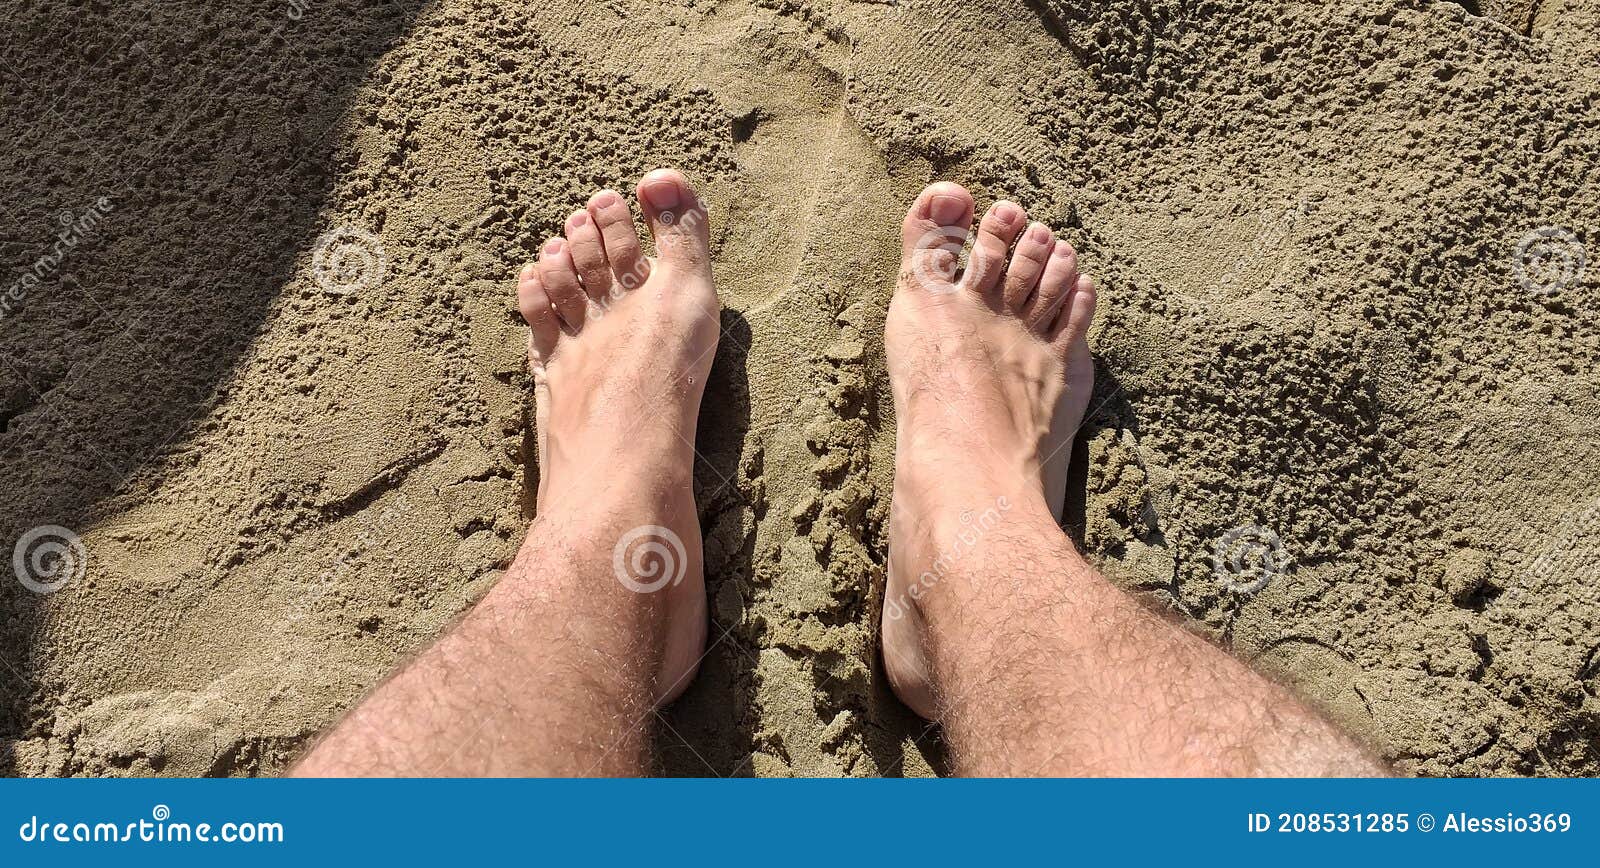 footprints of human feet on the warm sand